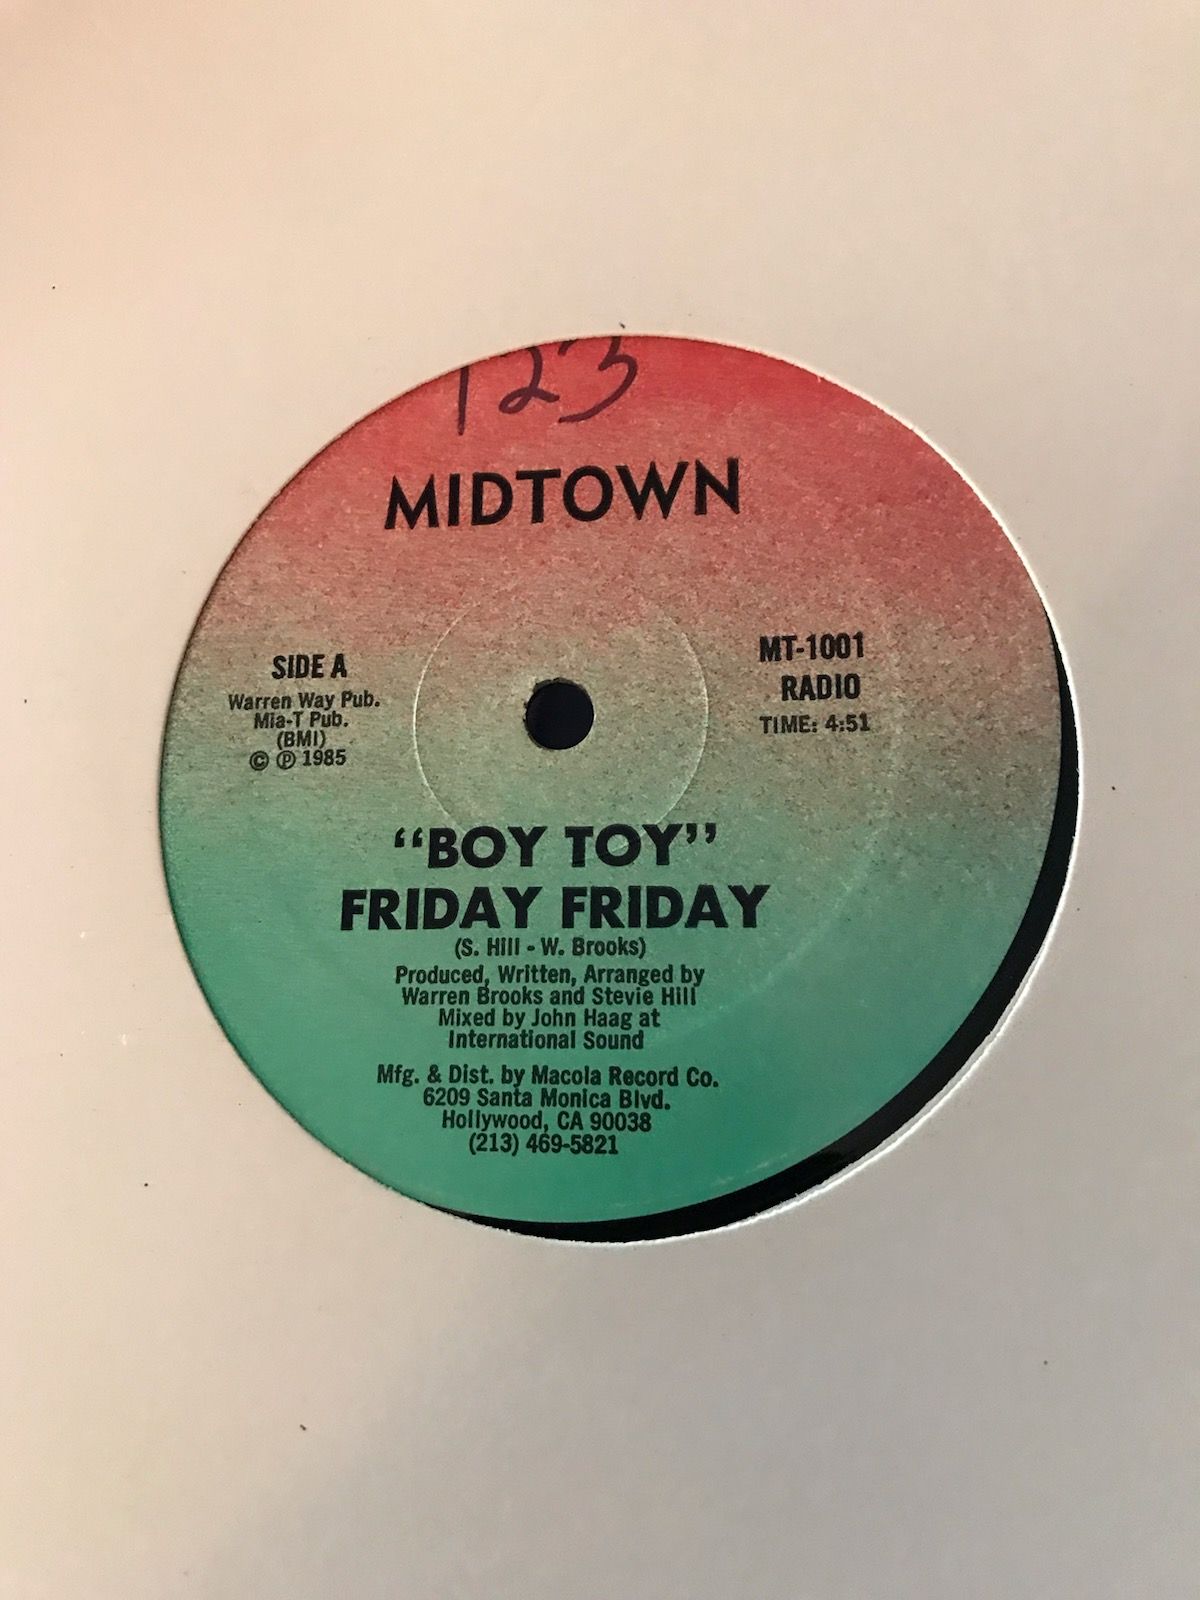 Friday Friday (Featuring Stevie B.) - BoyToy Friday Fri...